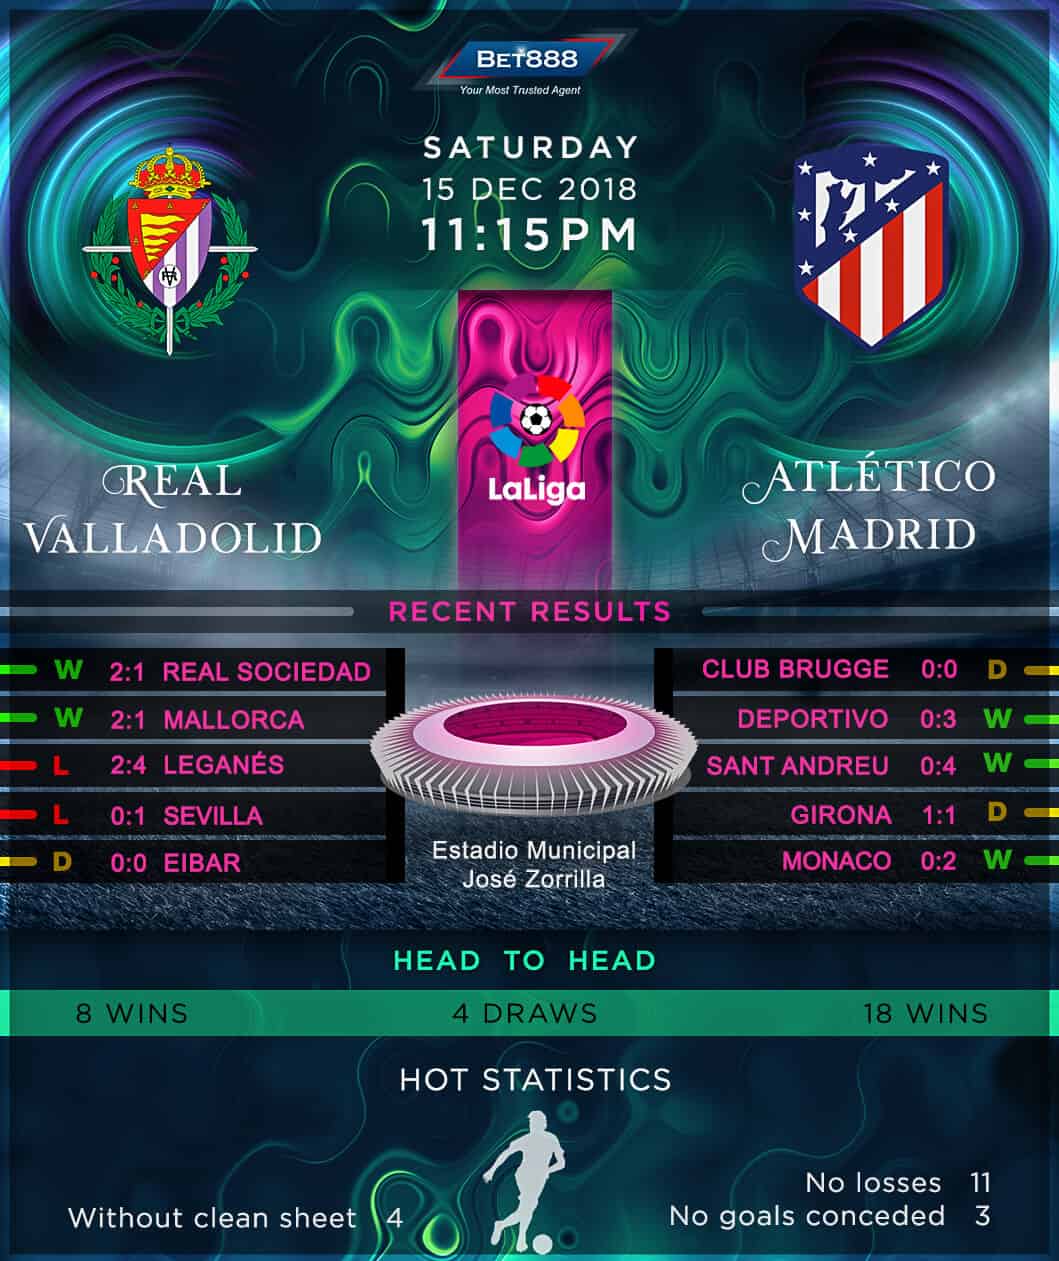 Real Valladolid vs Atletico Madrid 15/12/18